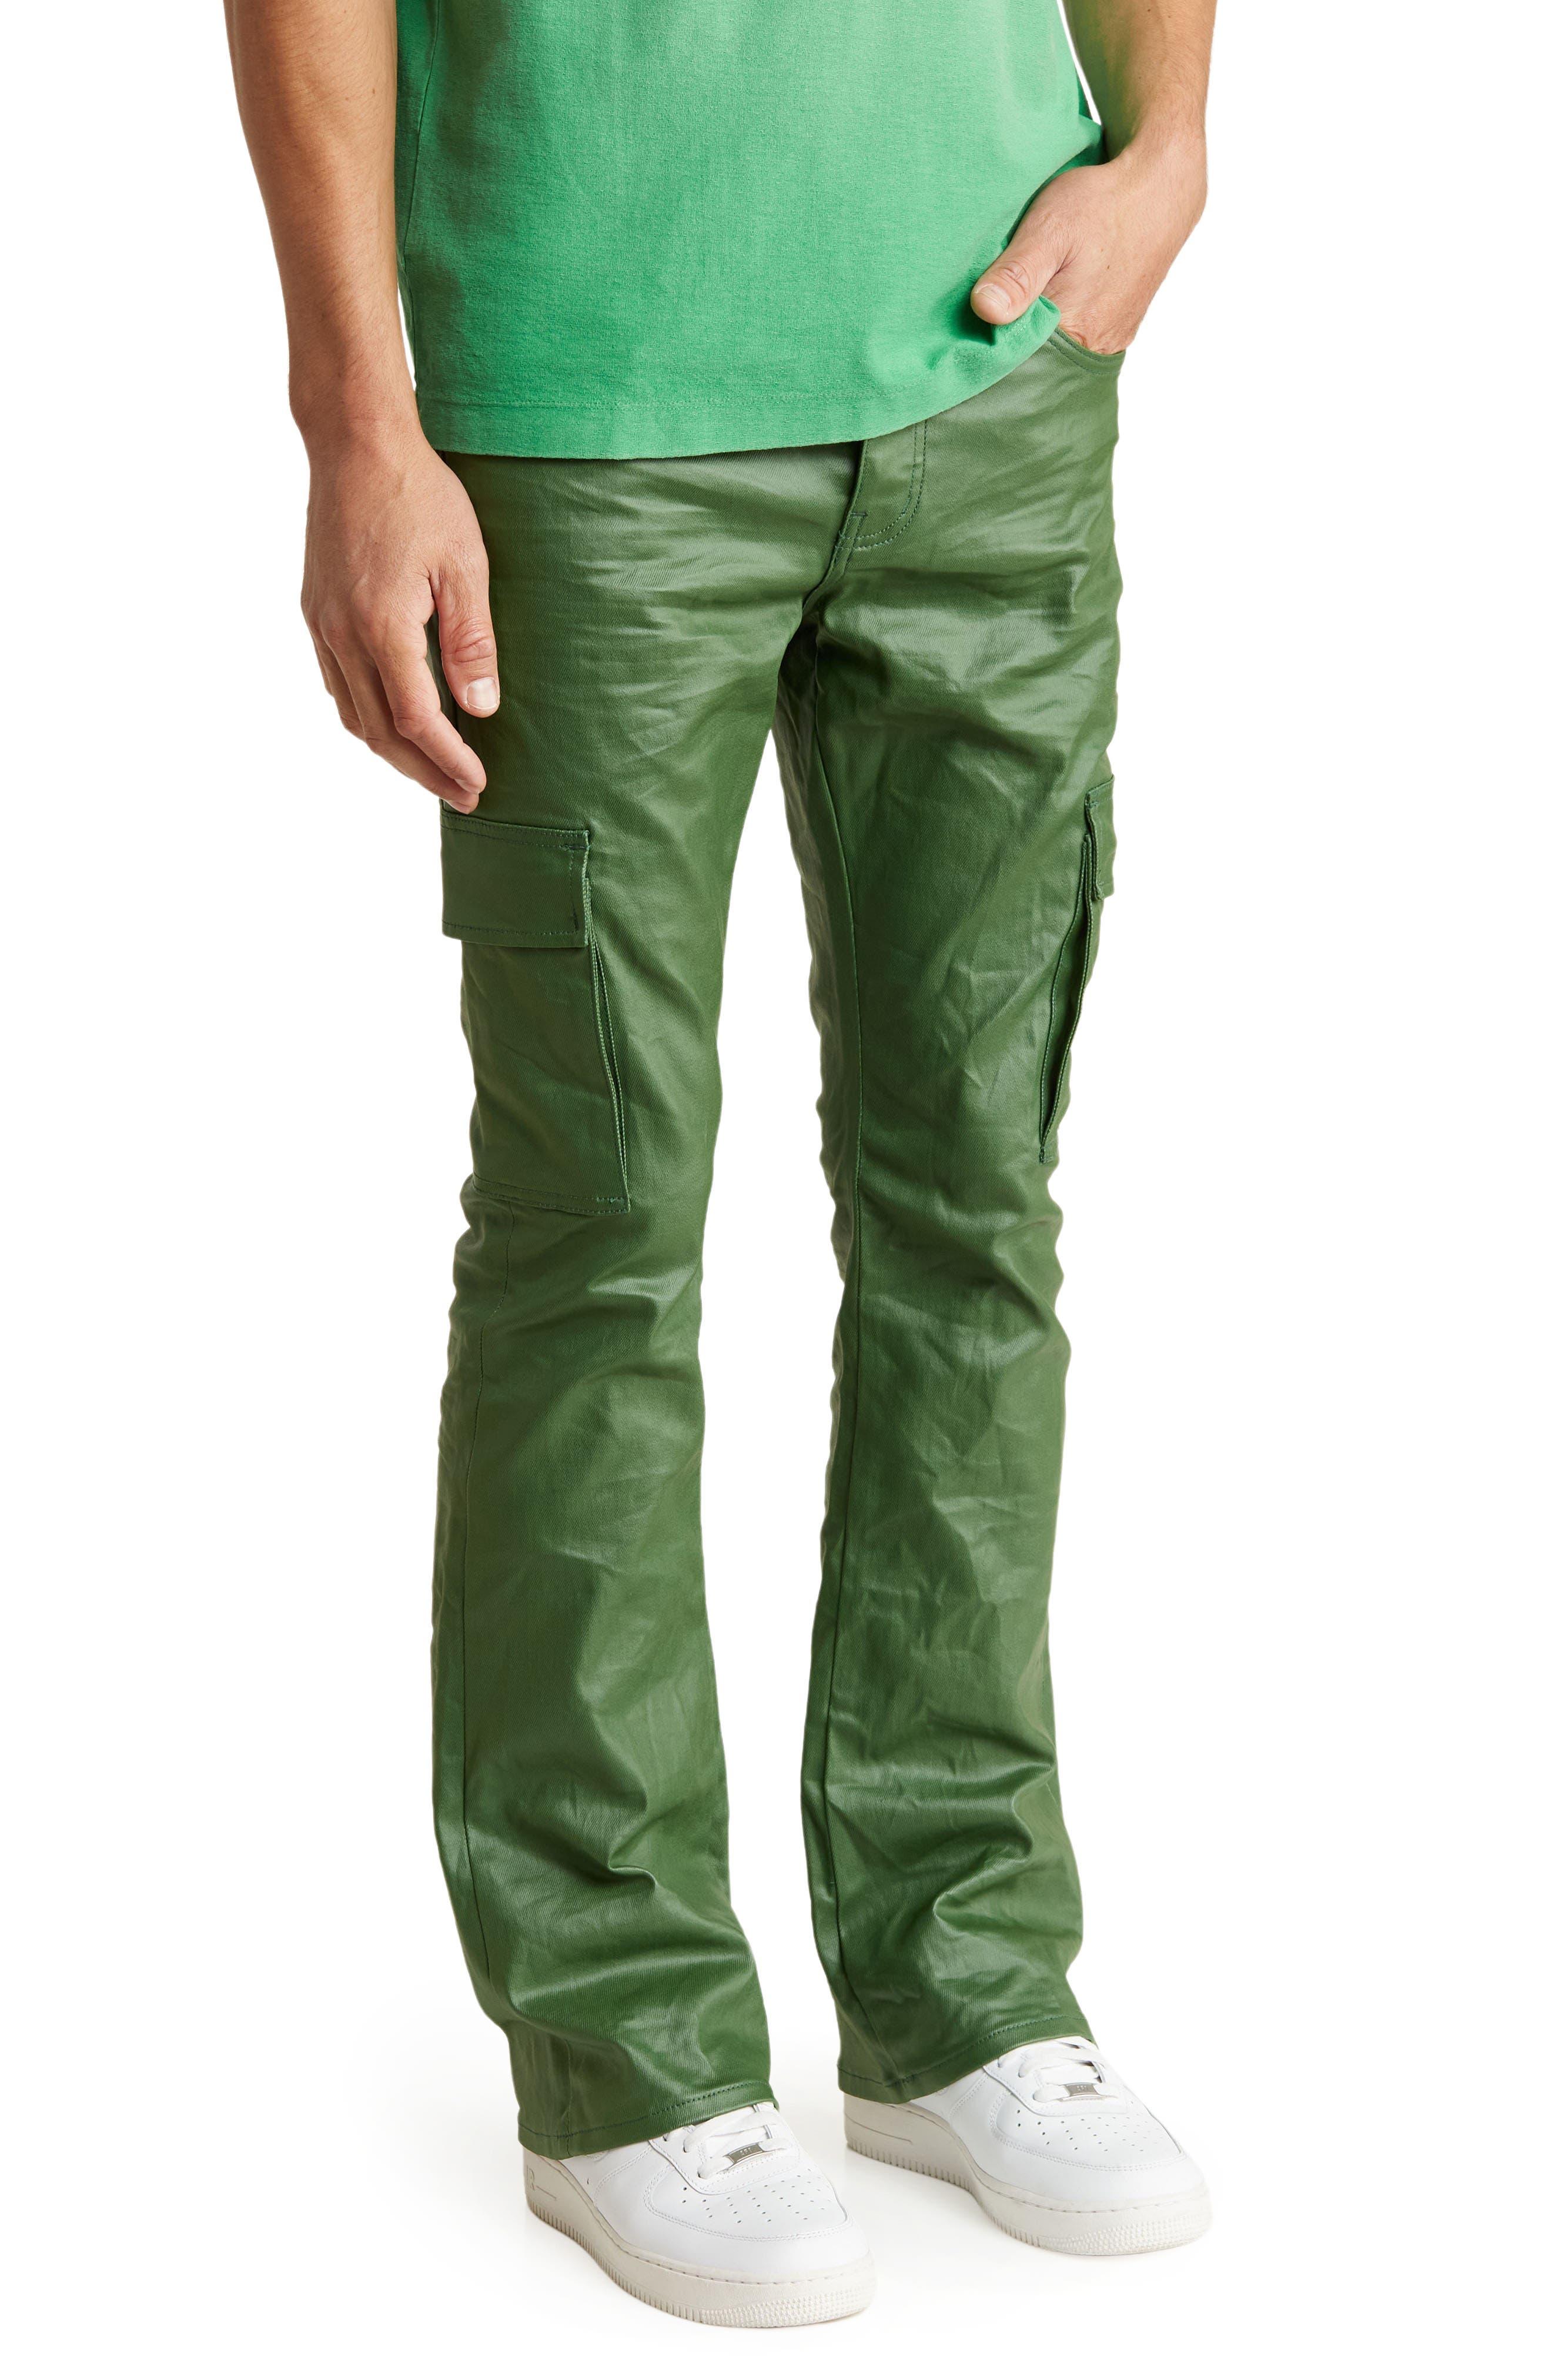 https://cdna.lystit.com/photos/nordstrom/c024dcc3/purple-brand-Green-Coated-Stretch-Flare-Cargo-Jeans.jpeg